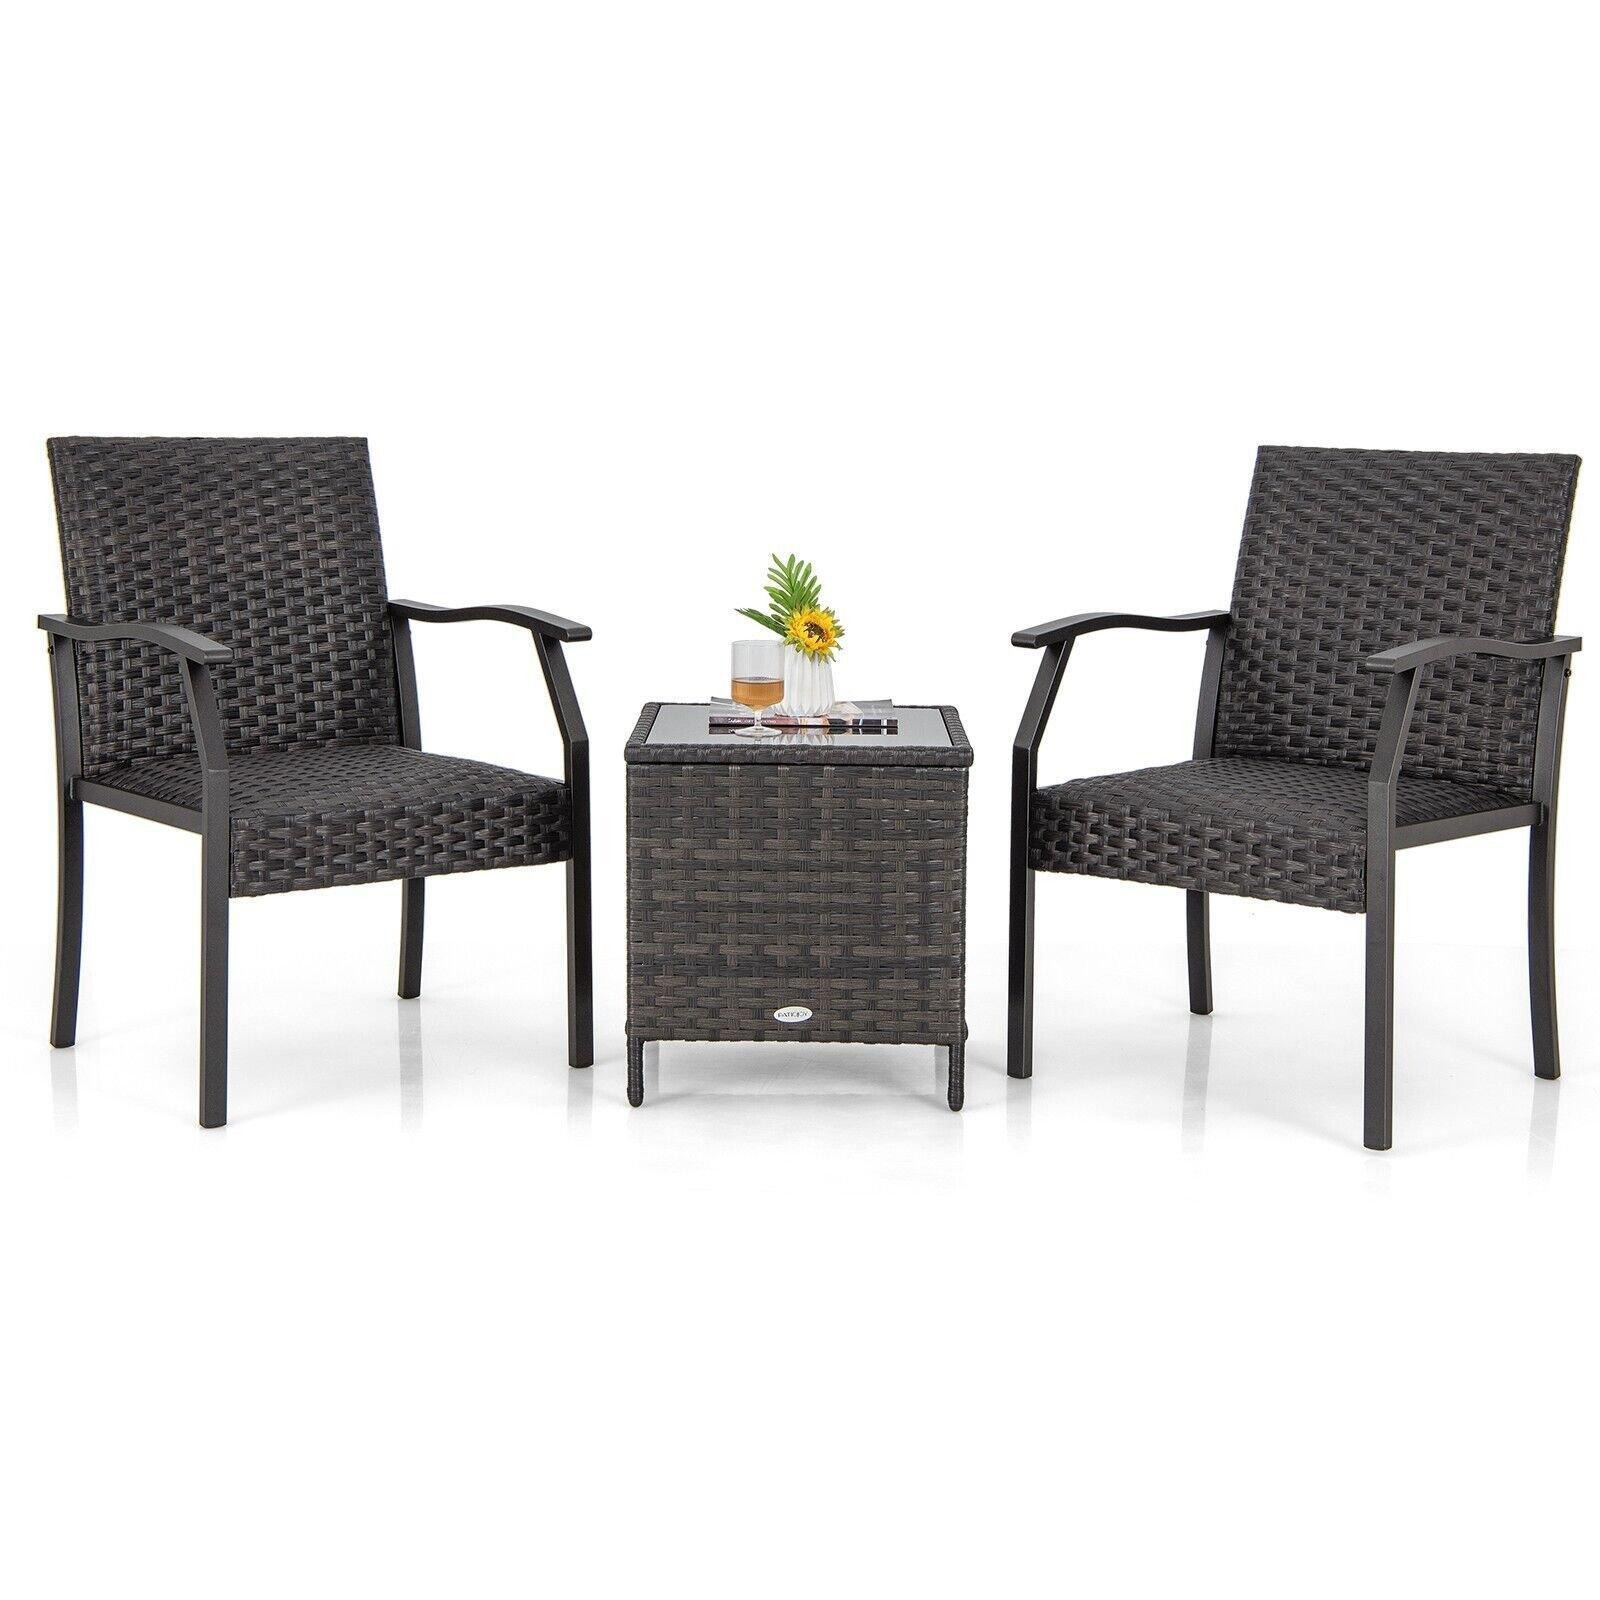 3 Piece Patio Wicker Chair Set Outdoor Rattan Conversation Set w/ Padded Seat - image 1